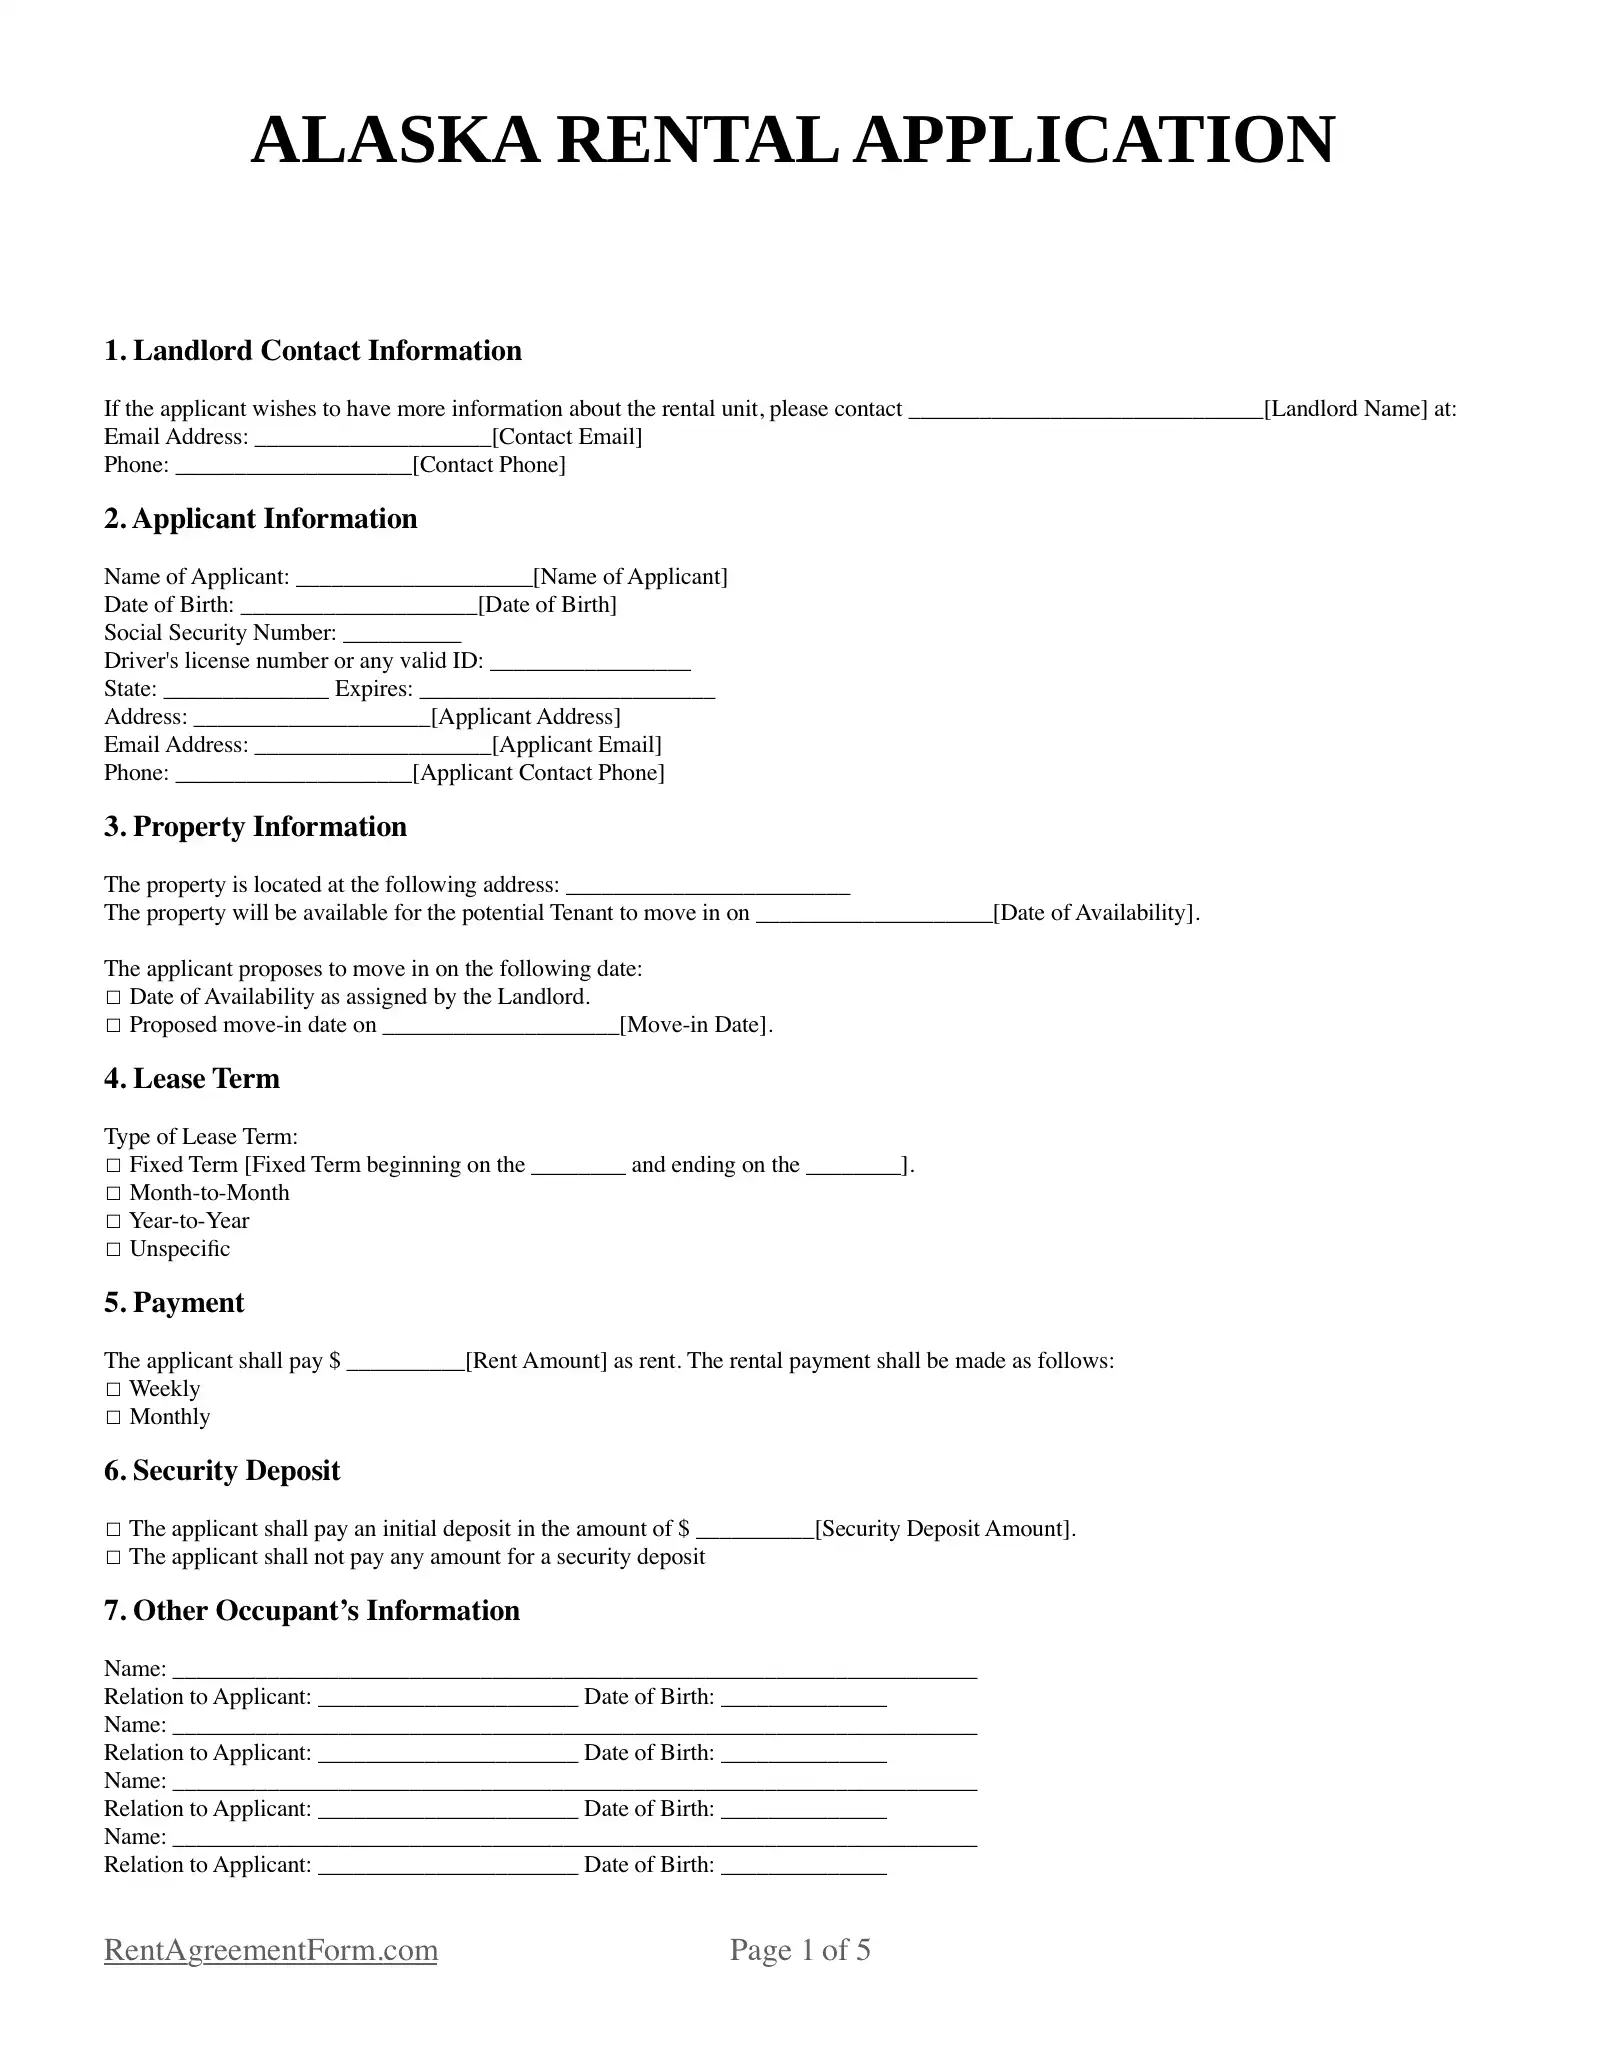 Alaska Rental Application Sample